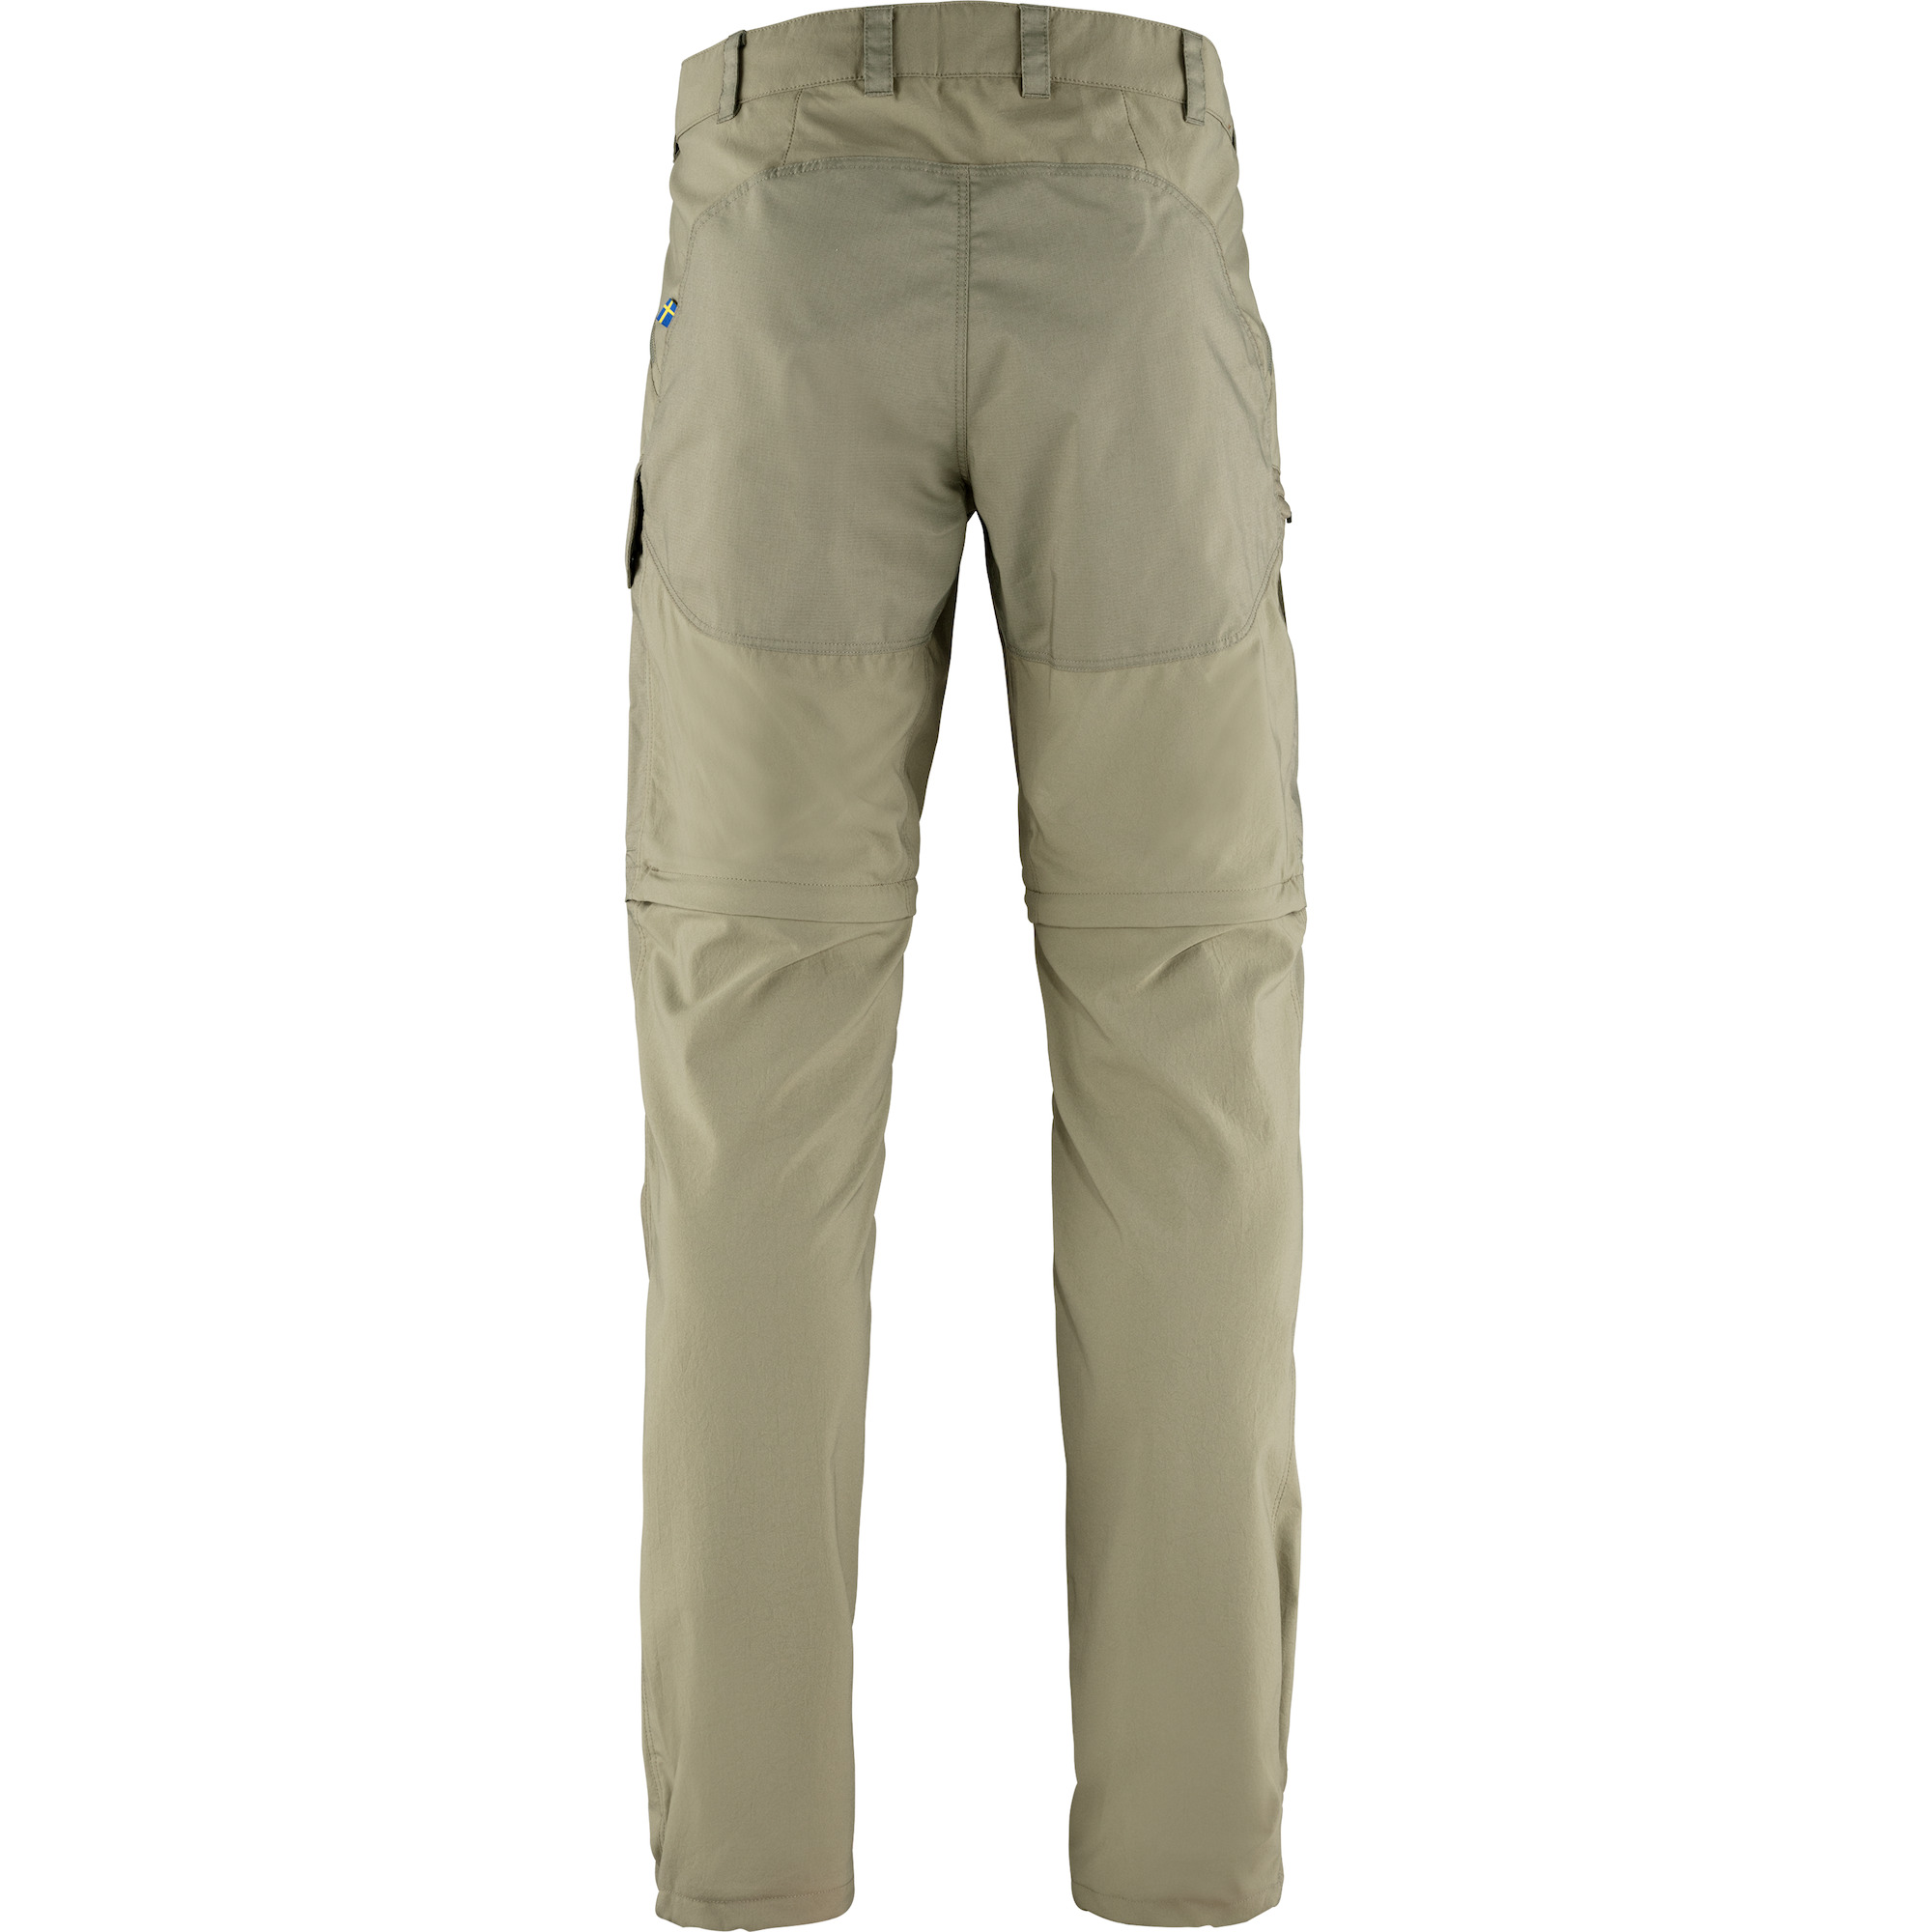 Quick Dry Zip-off Pants/Shorts – Guts Fishing Apparel